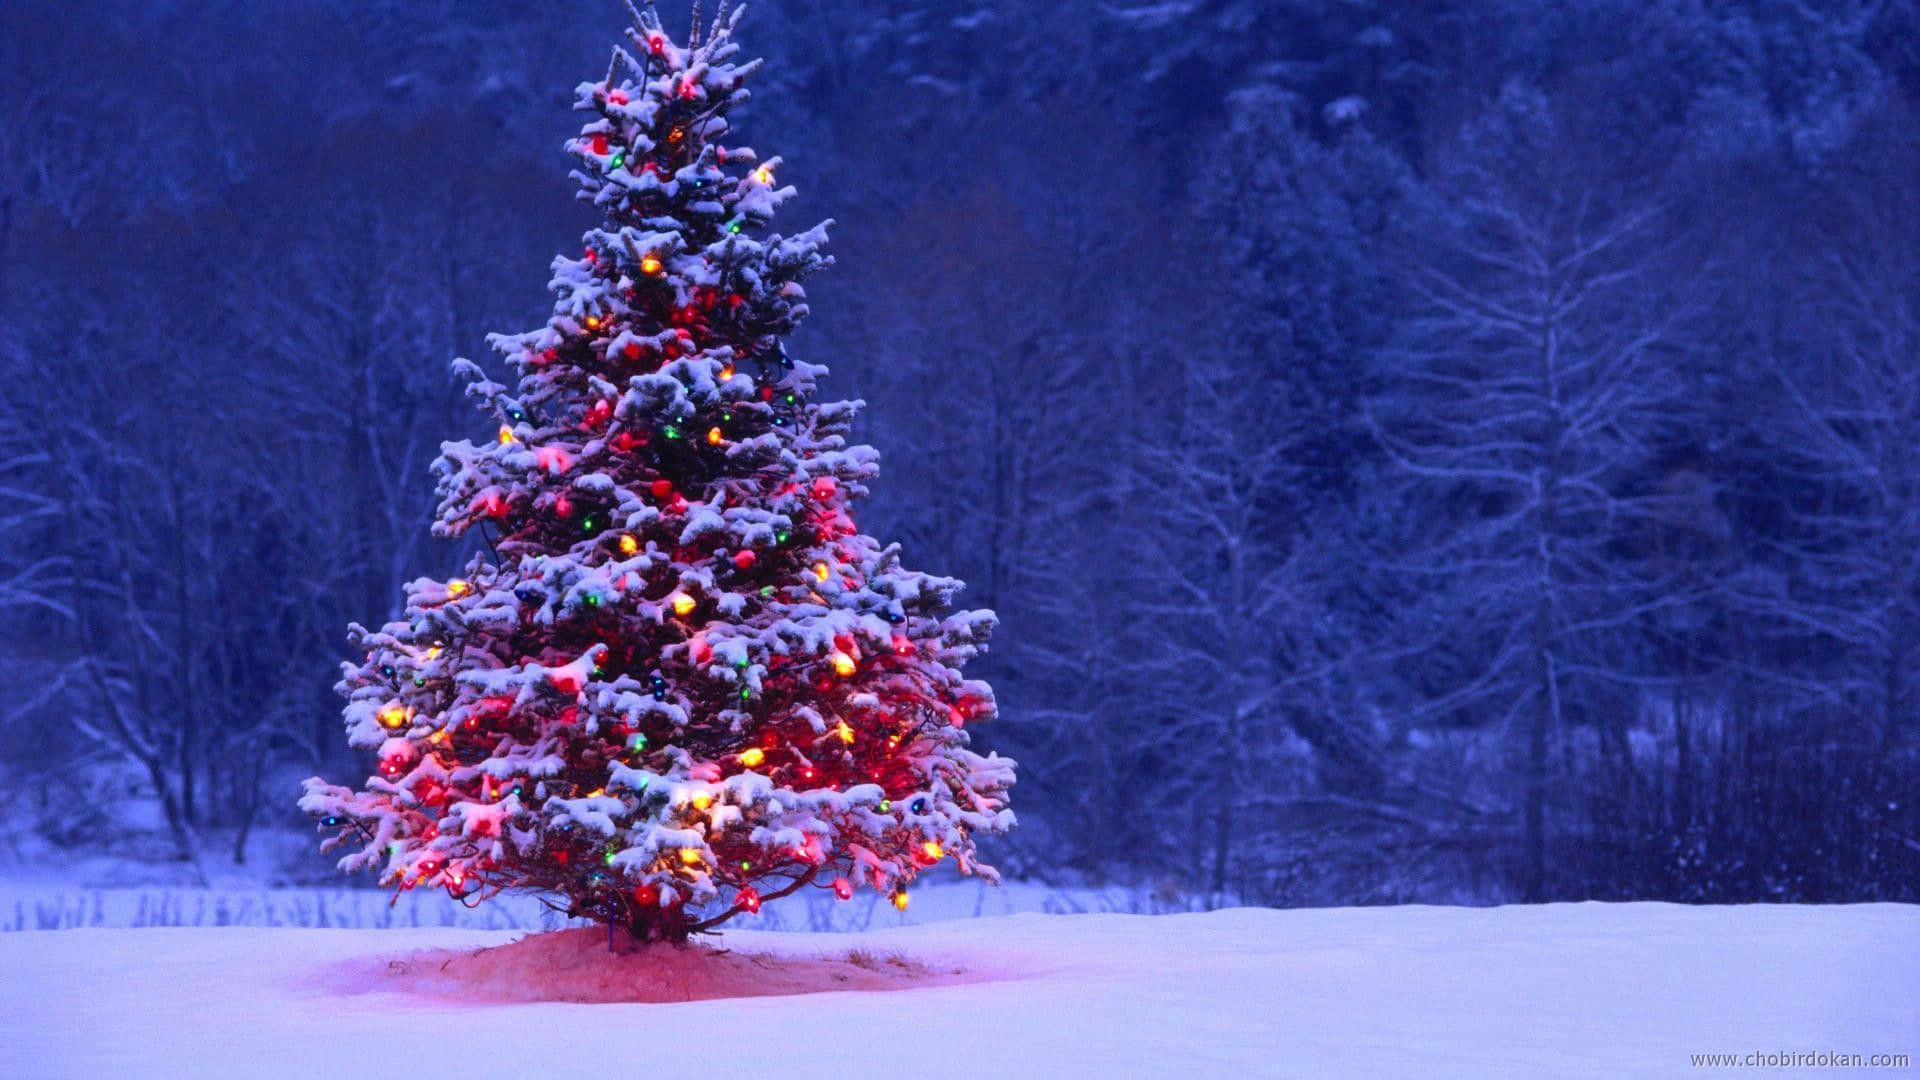 Celebrate the Festive Season with a Snowy Christmas Landscape